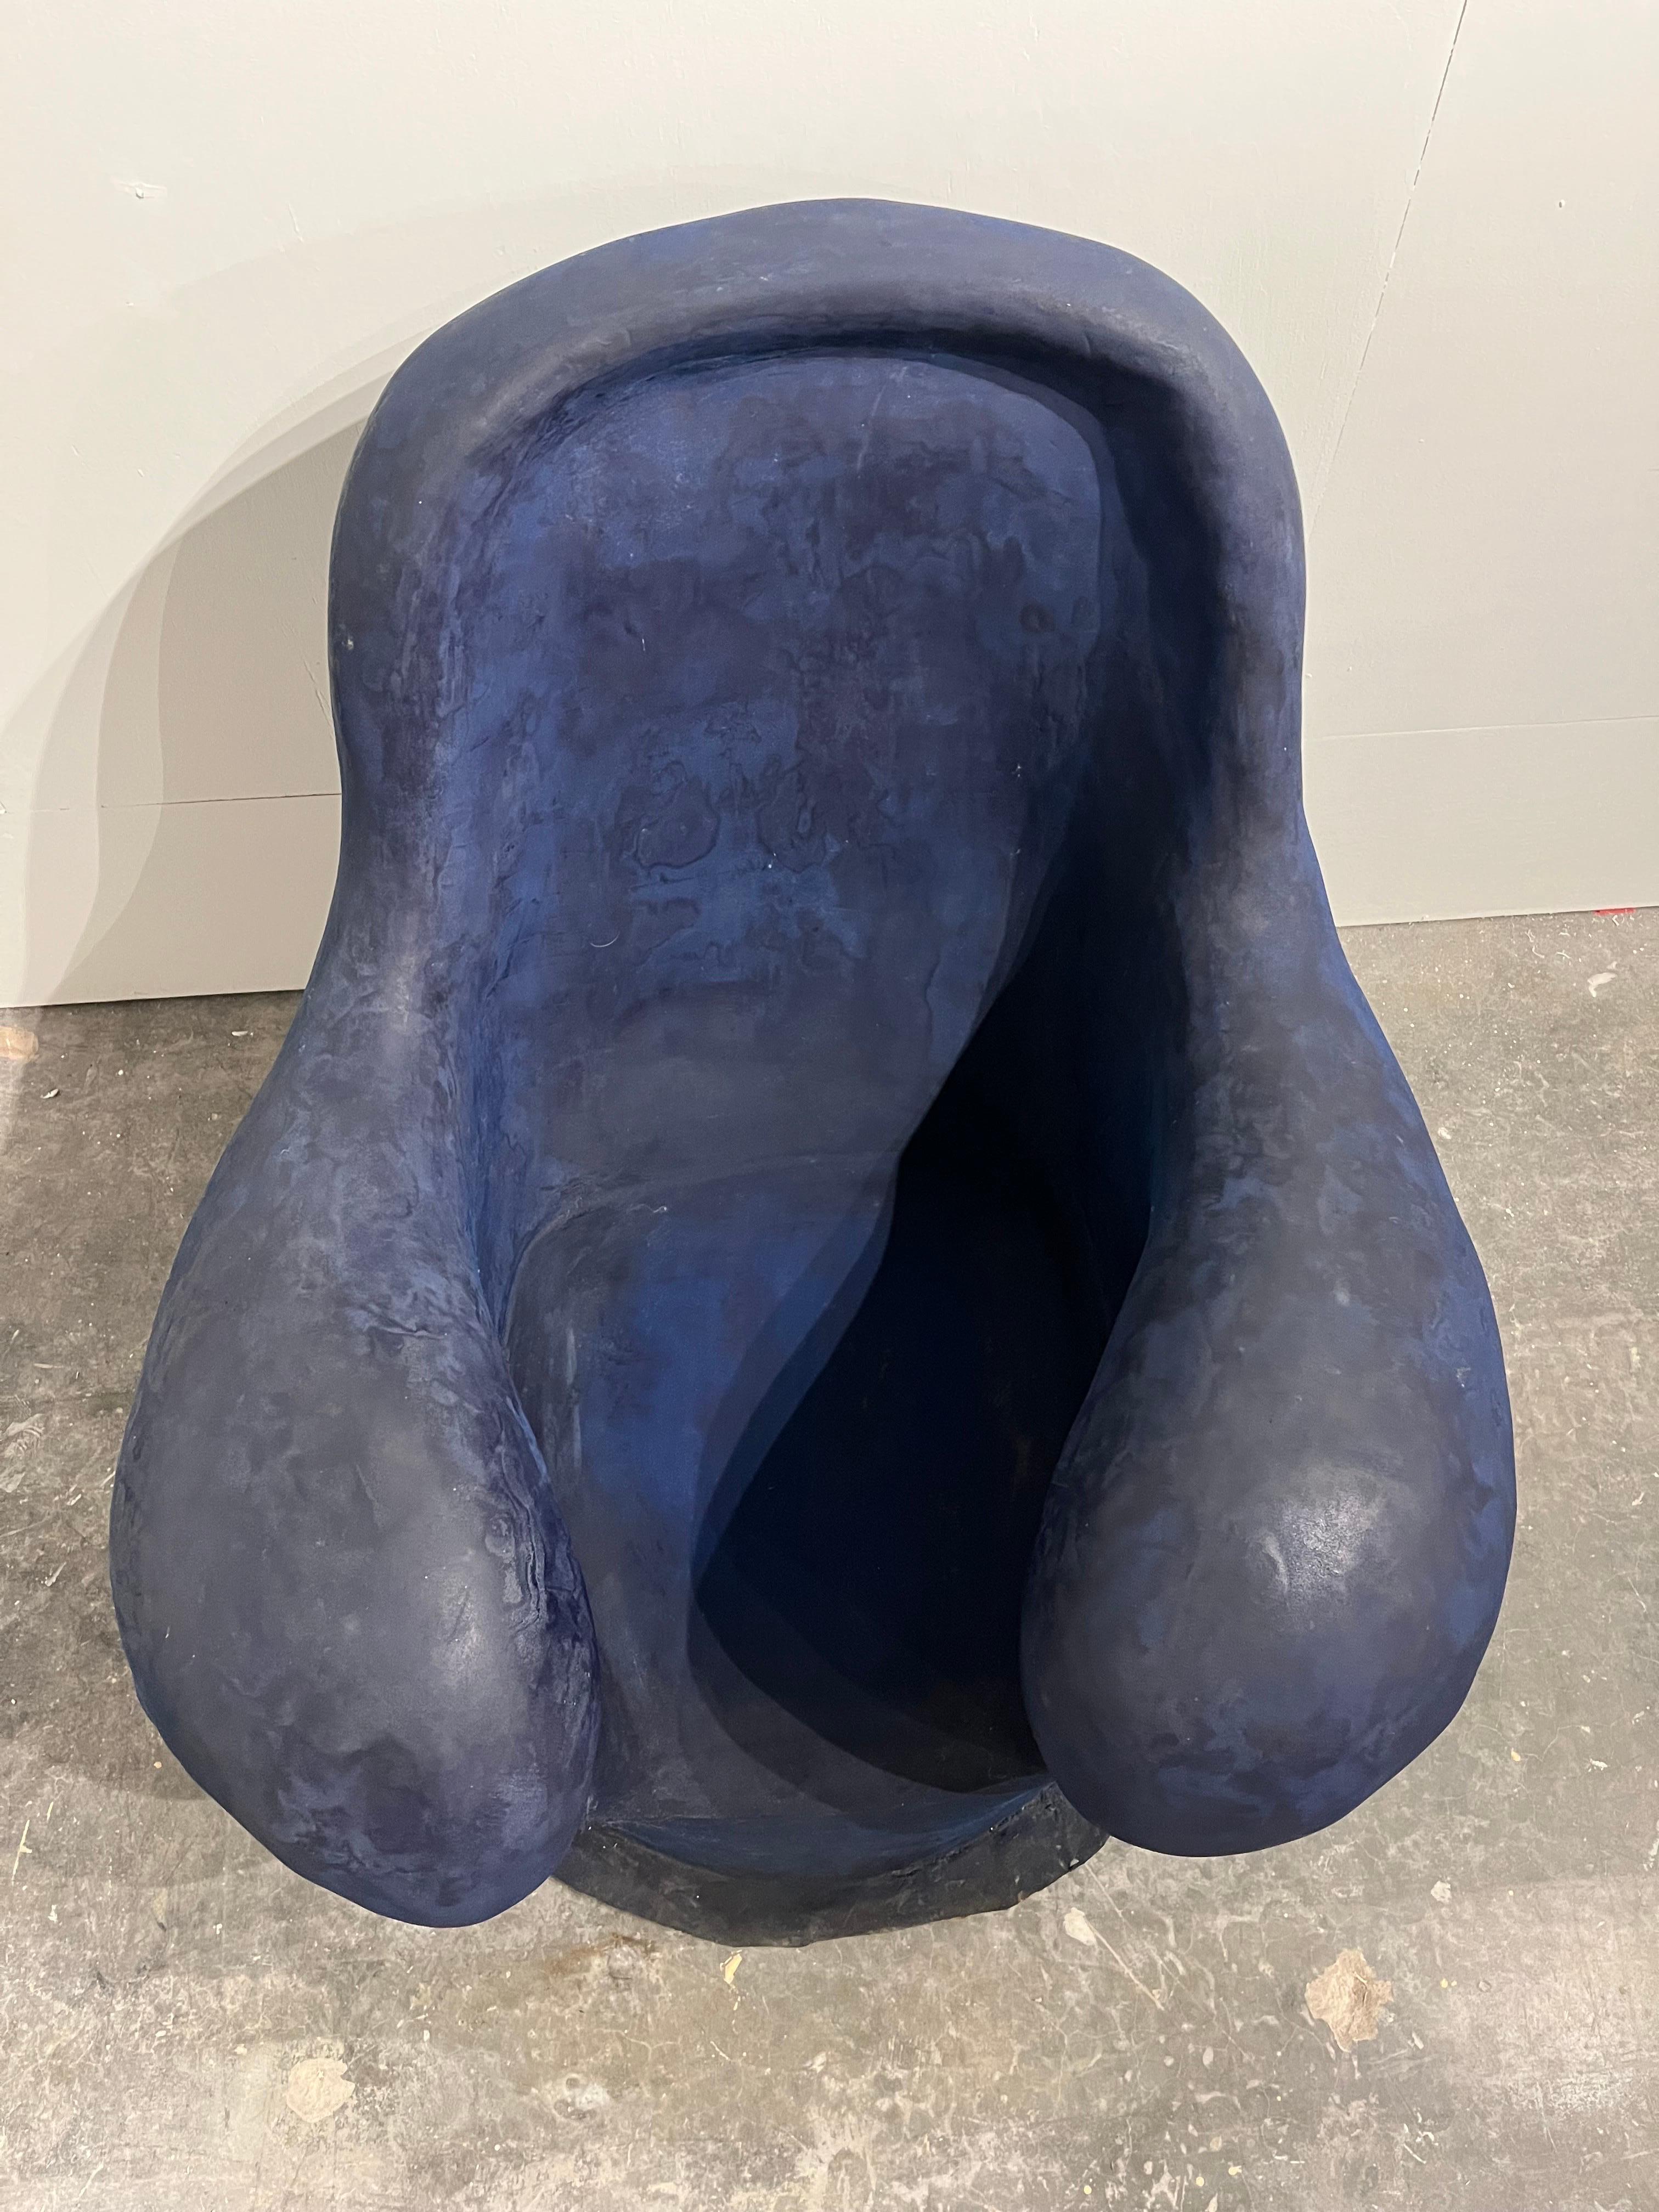 Molded Louis Durot French Post War Contemporary Artist Blue Polymer Armchair Sculpture